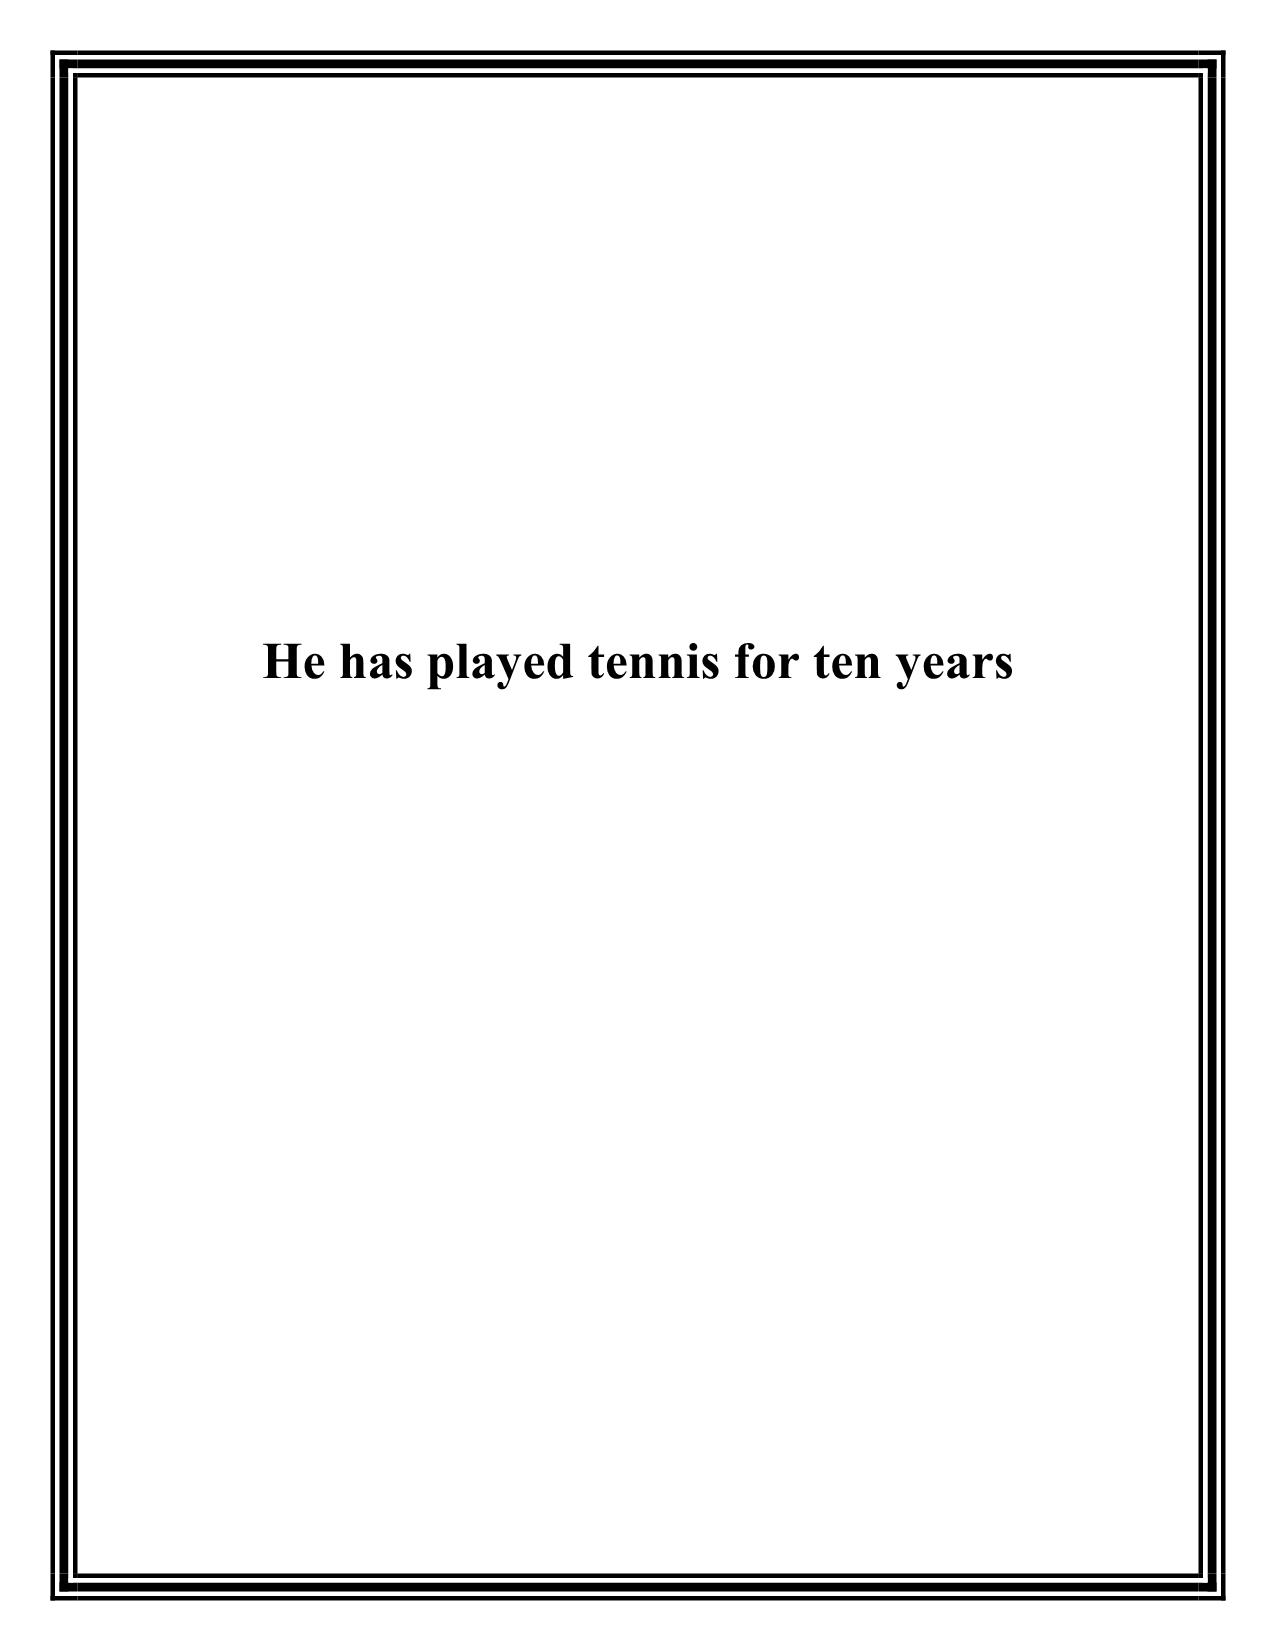 He has played tennis for ten years trang 1